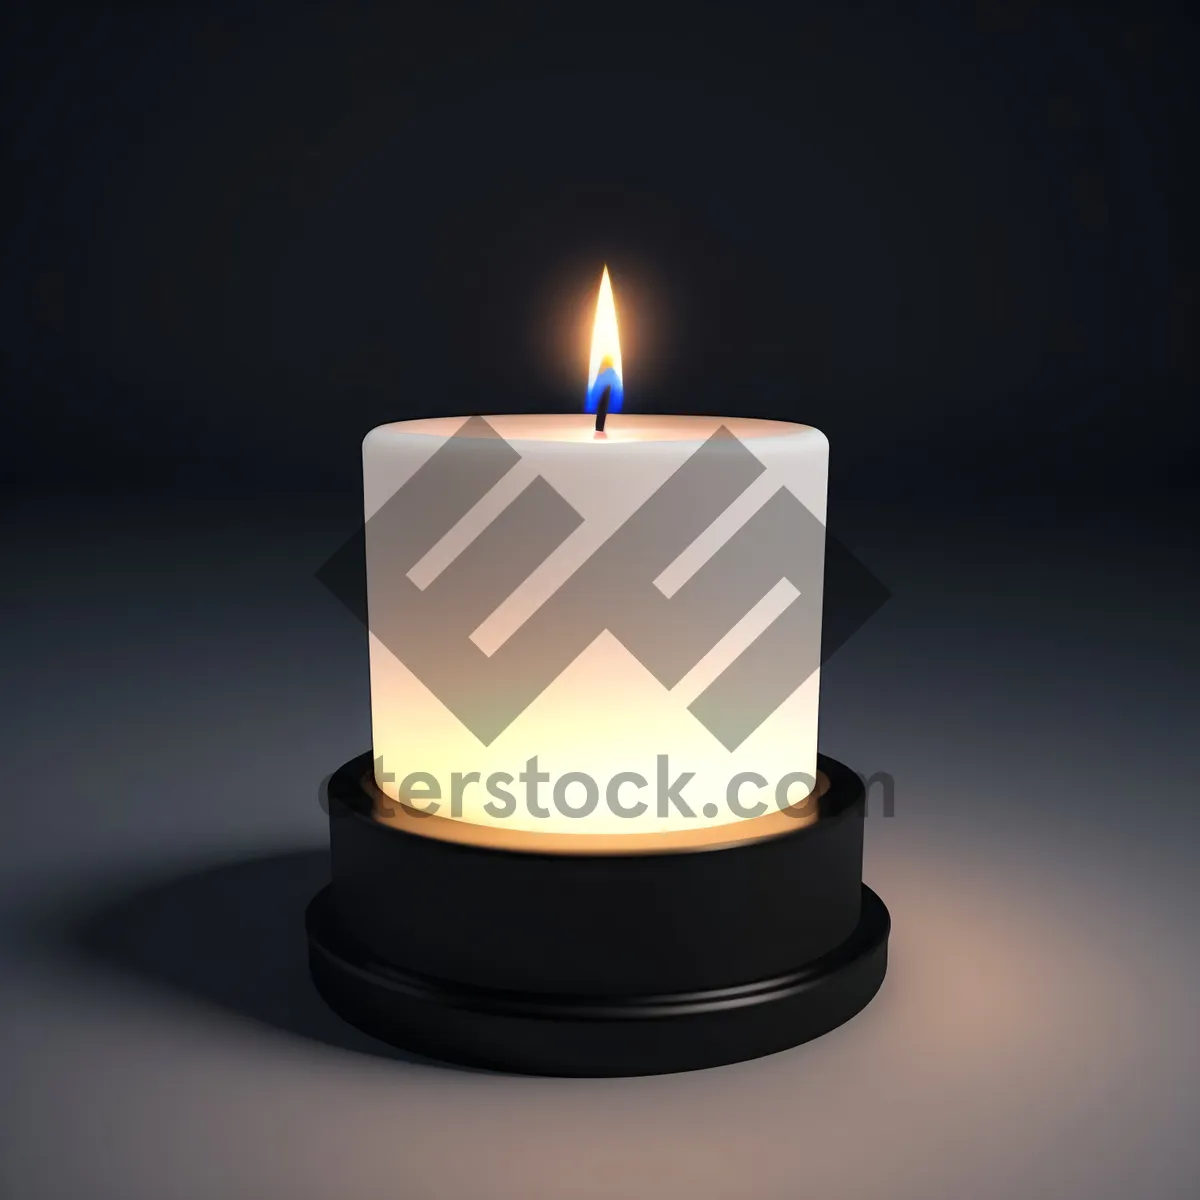 Picture of Flaming Wax Illumination: Celebratory Decorative Candle Icon